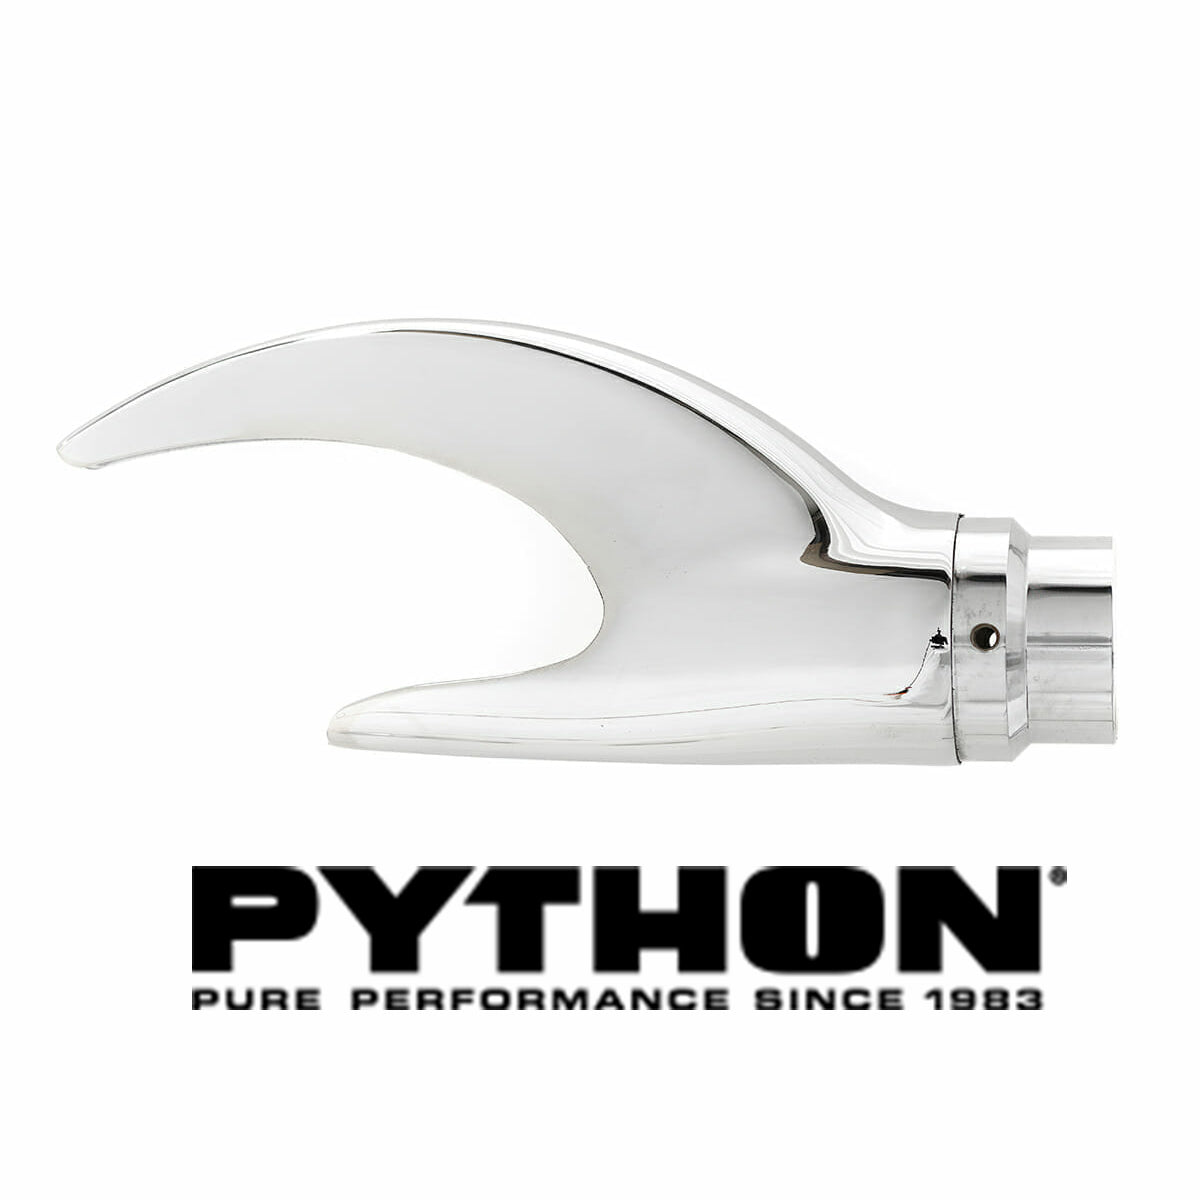 Reaper Exhaust Tips from Cuztom Kraft python python python.